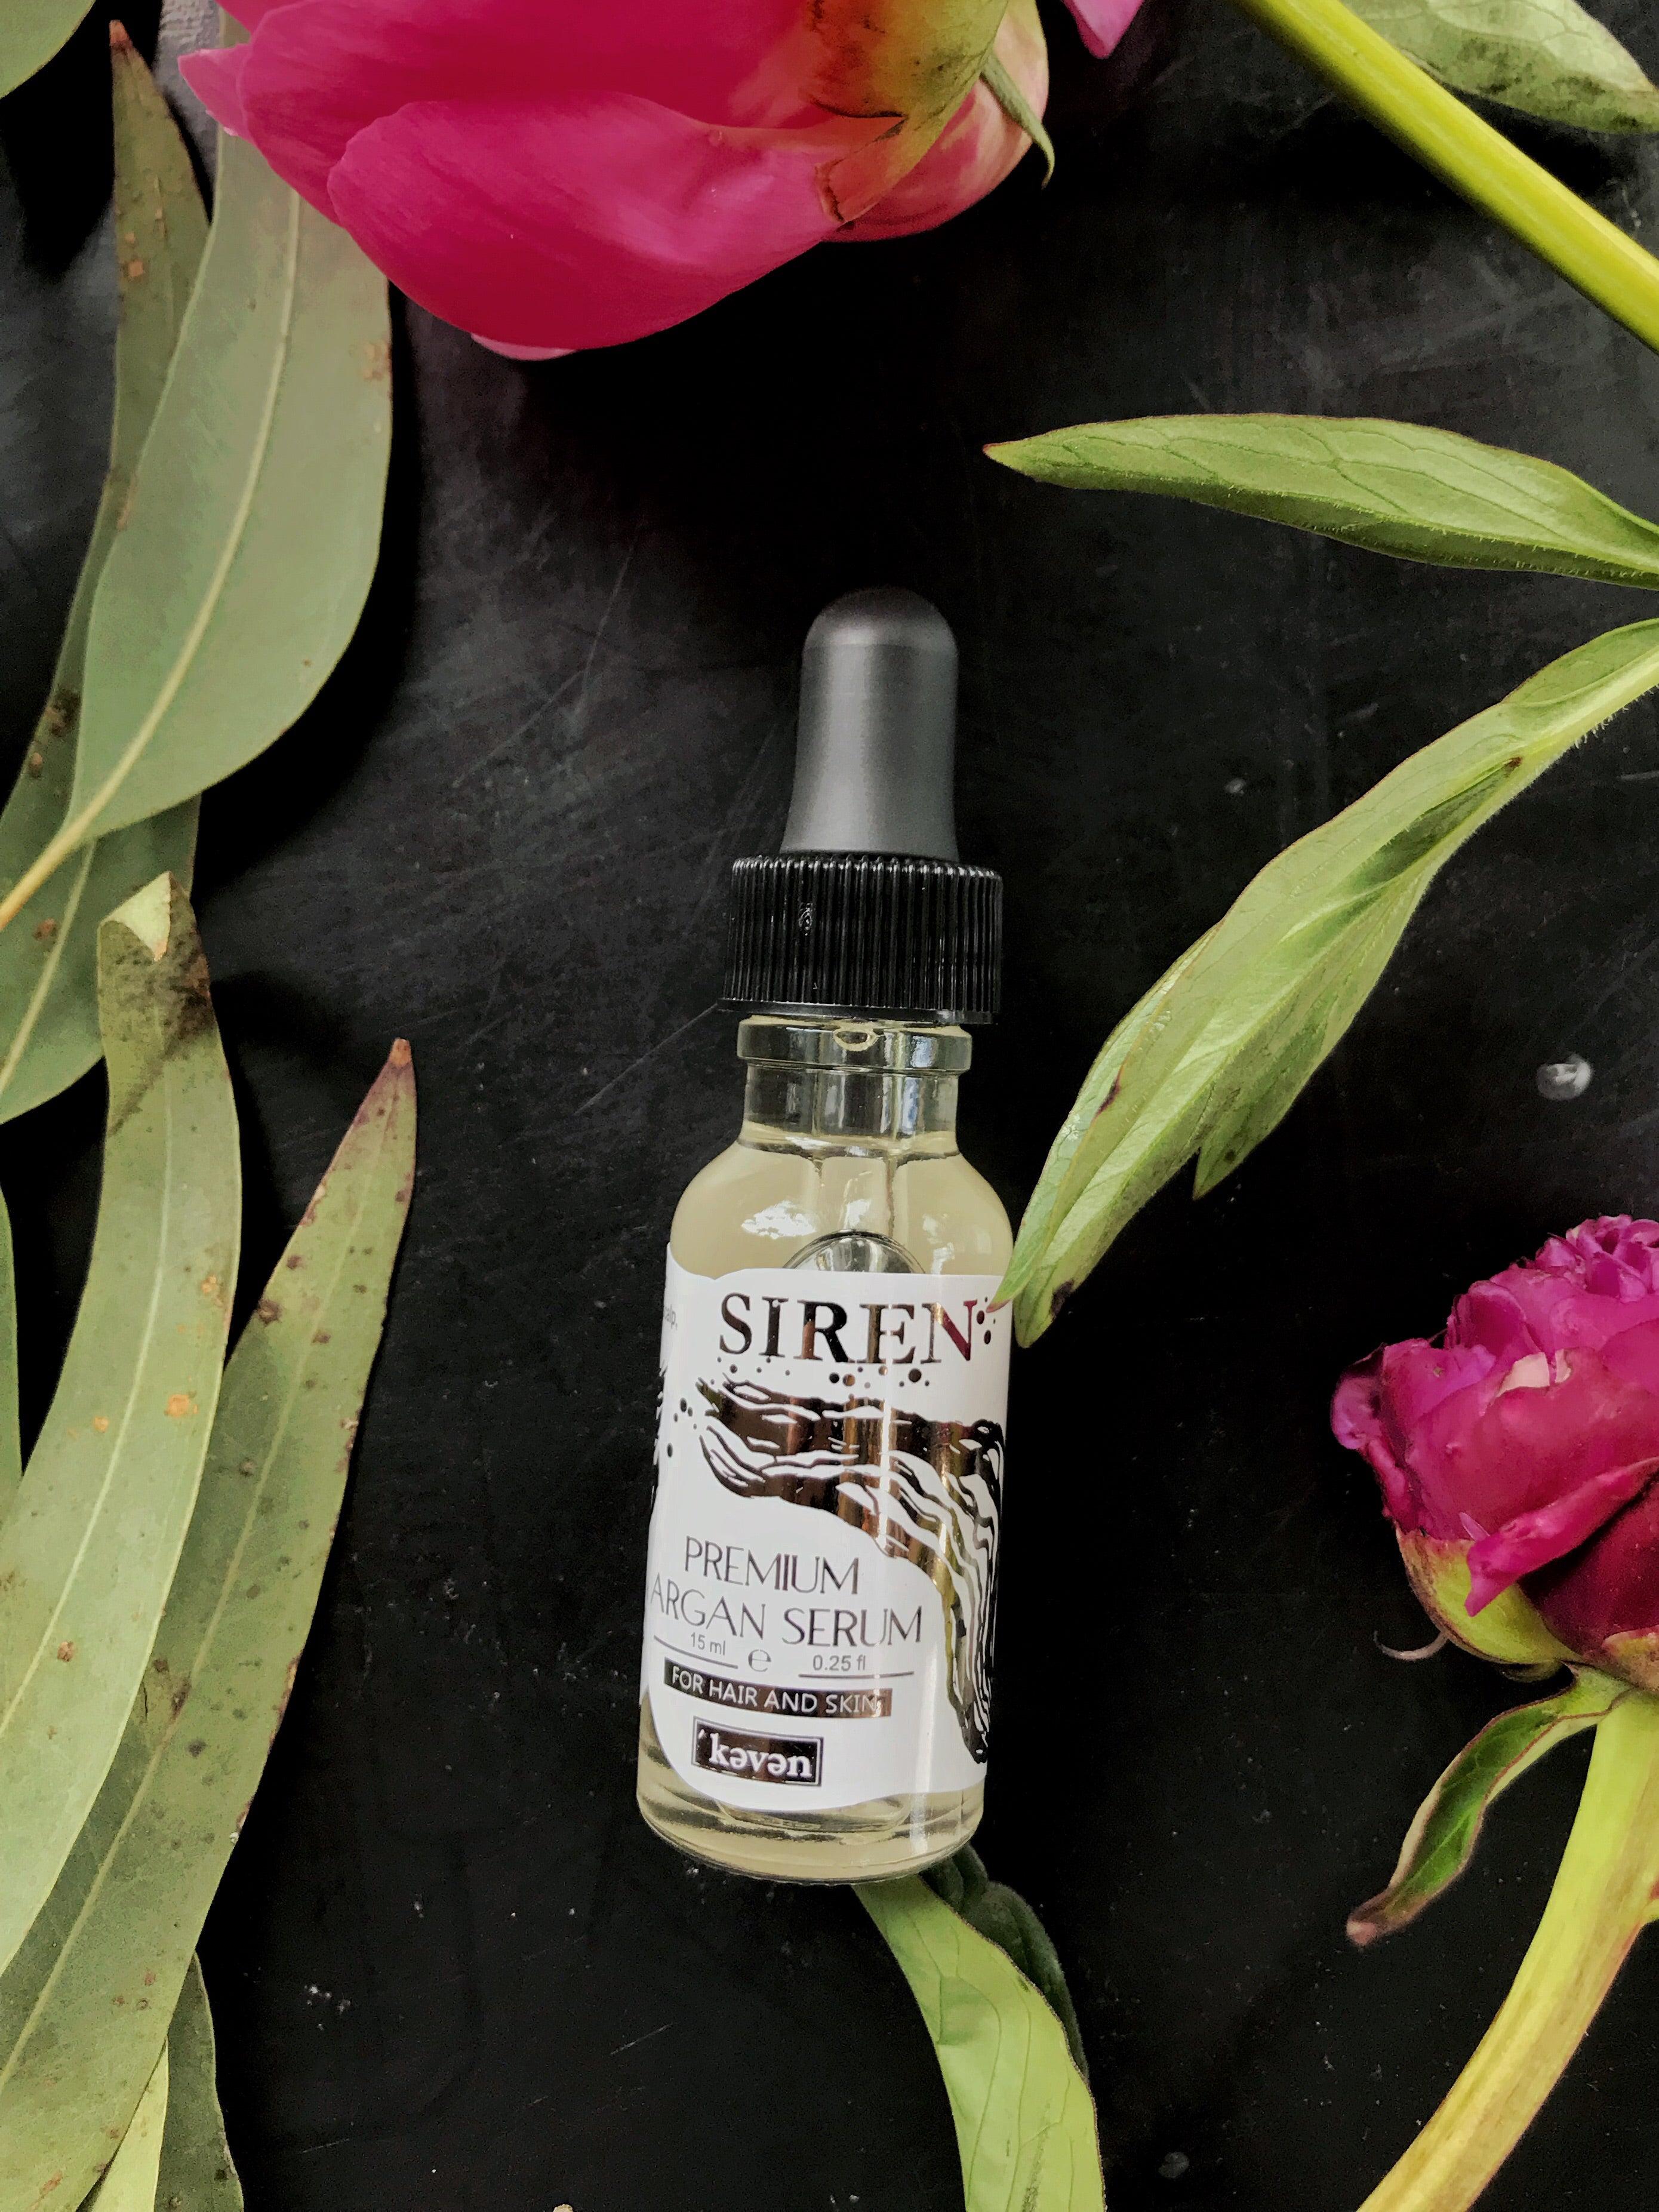 Siren Premium Argan Serum - For Hair and Skin - Keven Craft Rituals